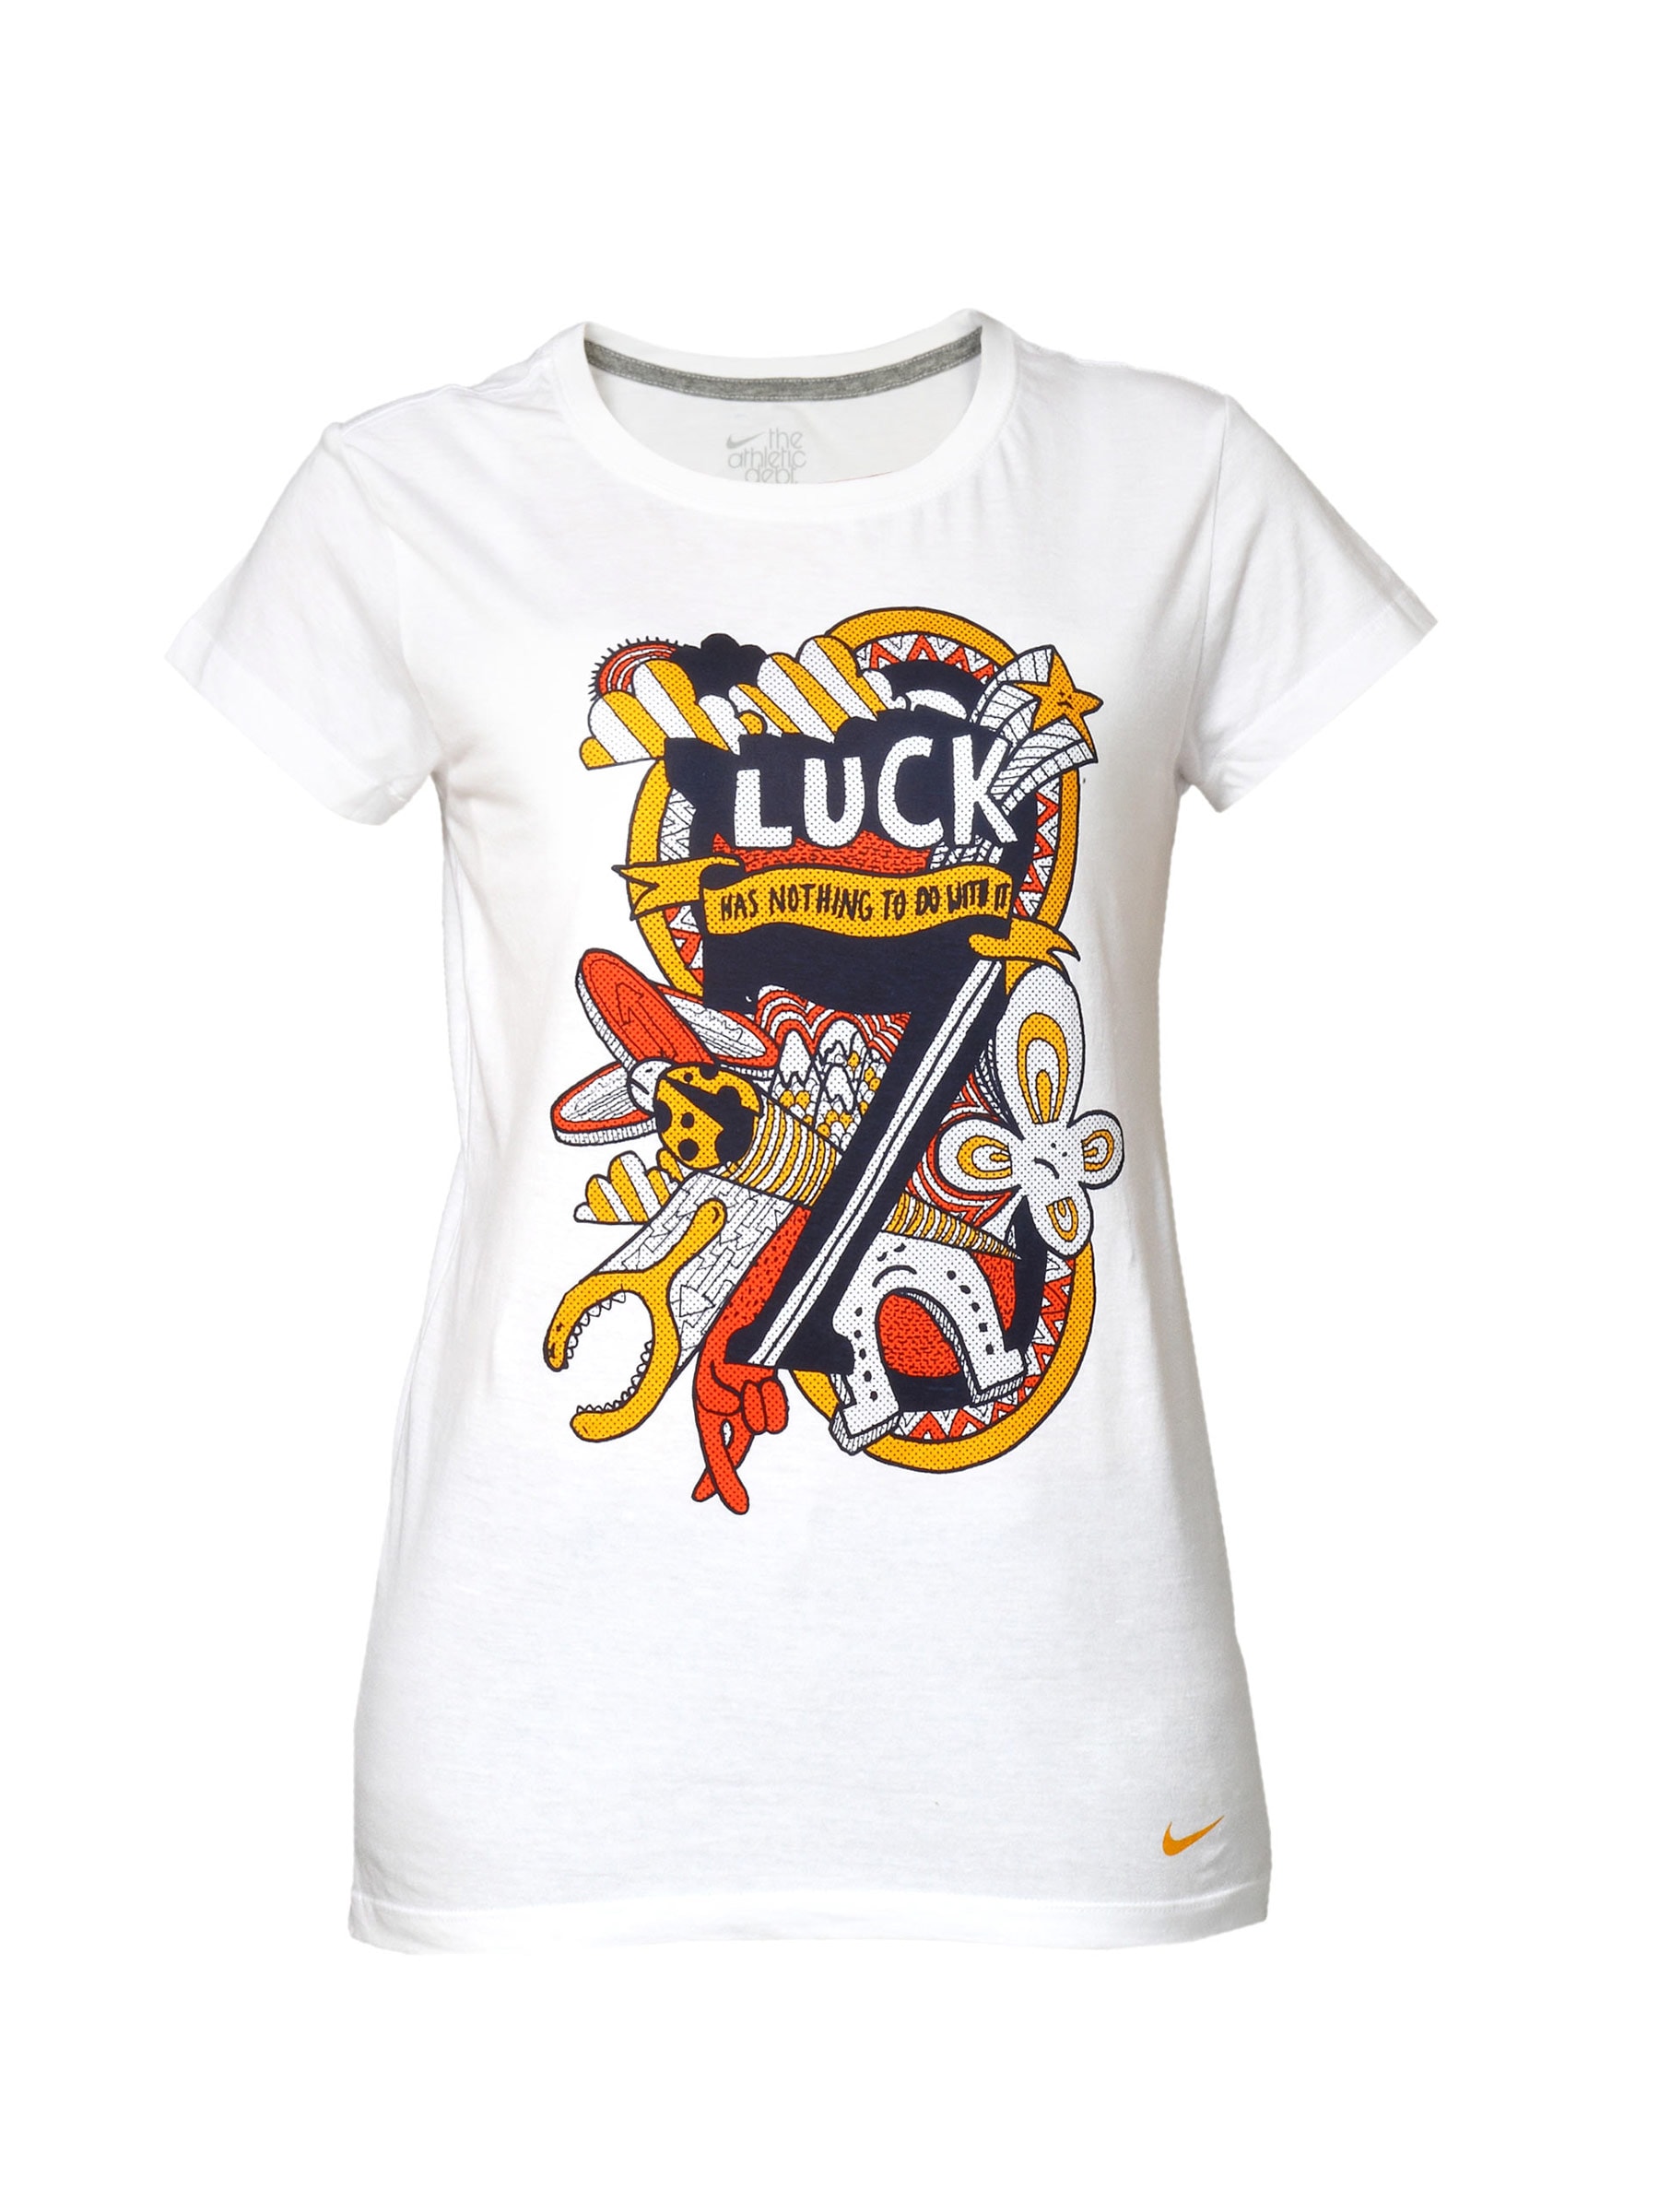 Nike Womens Luck White T-shirt